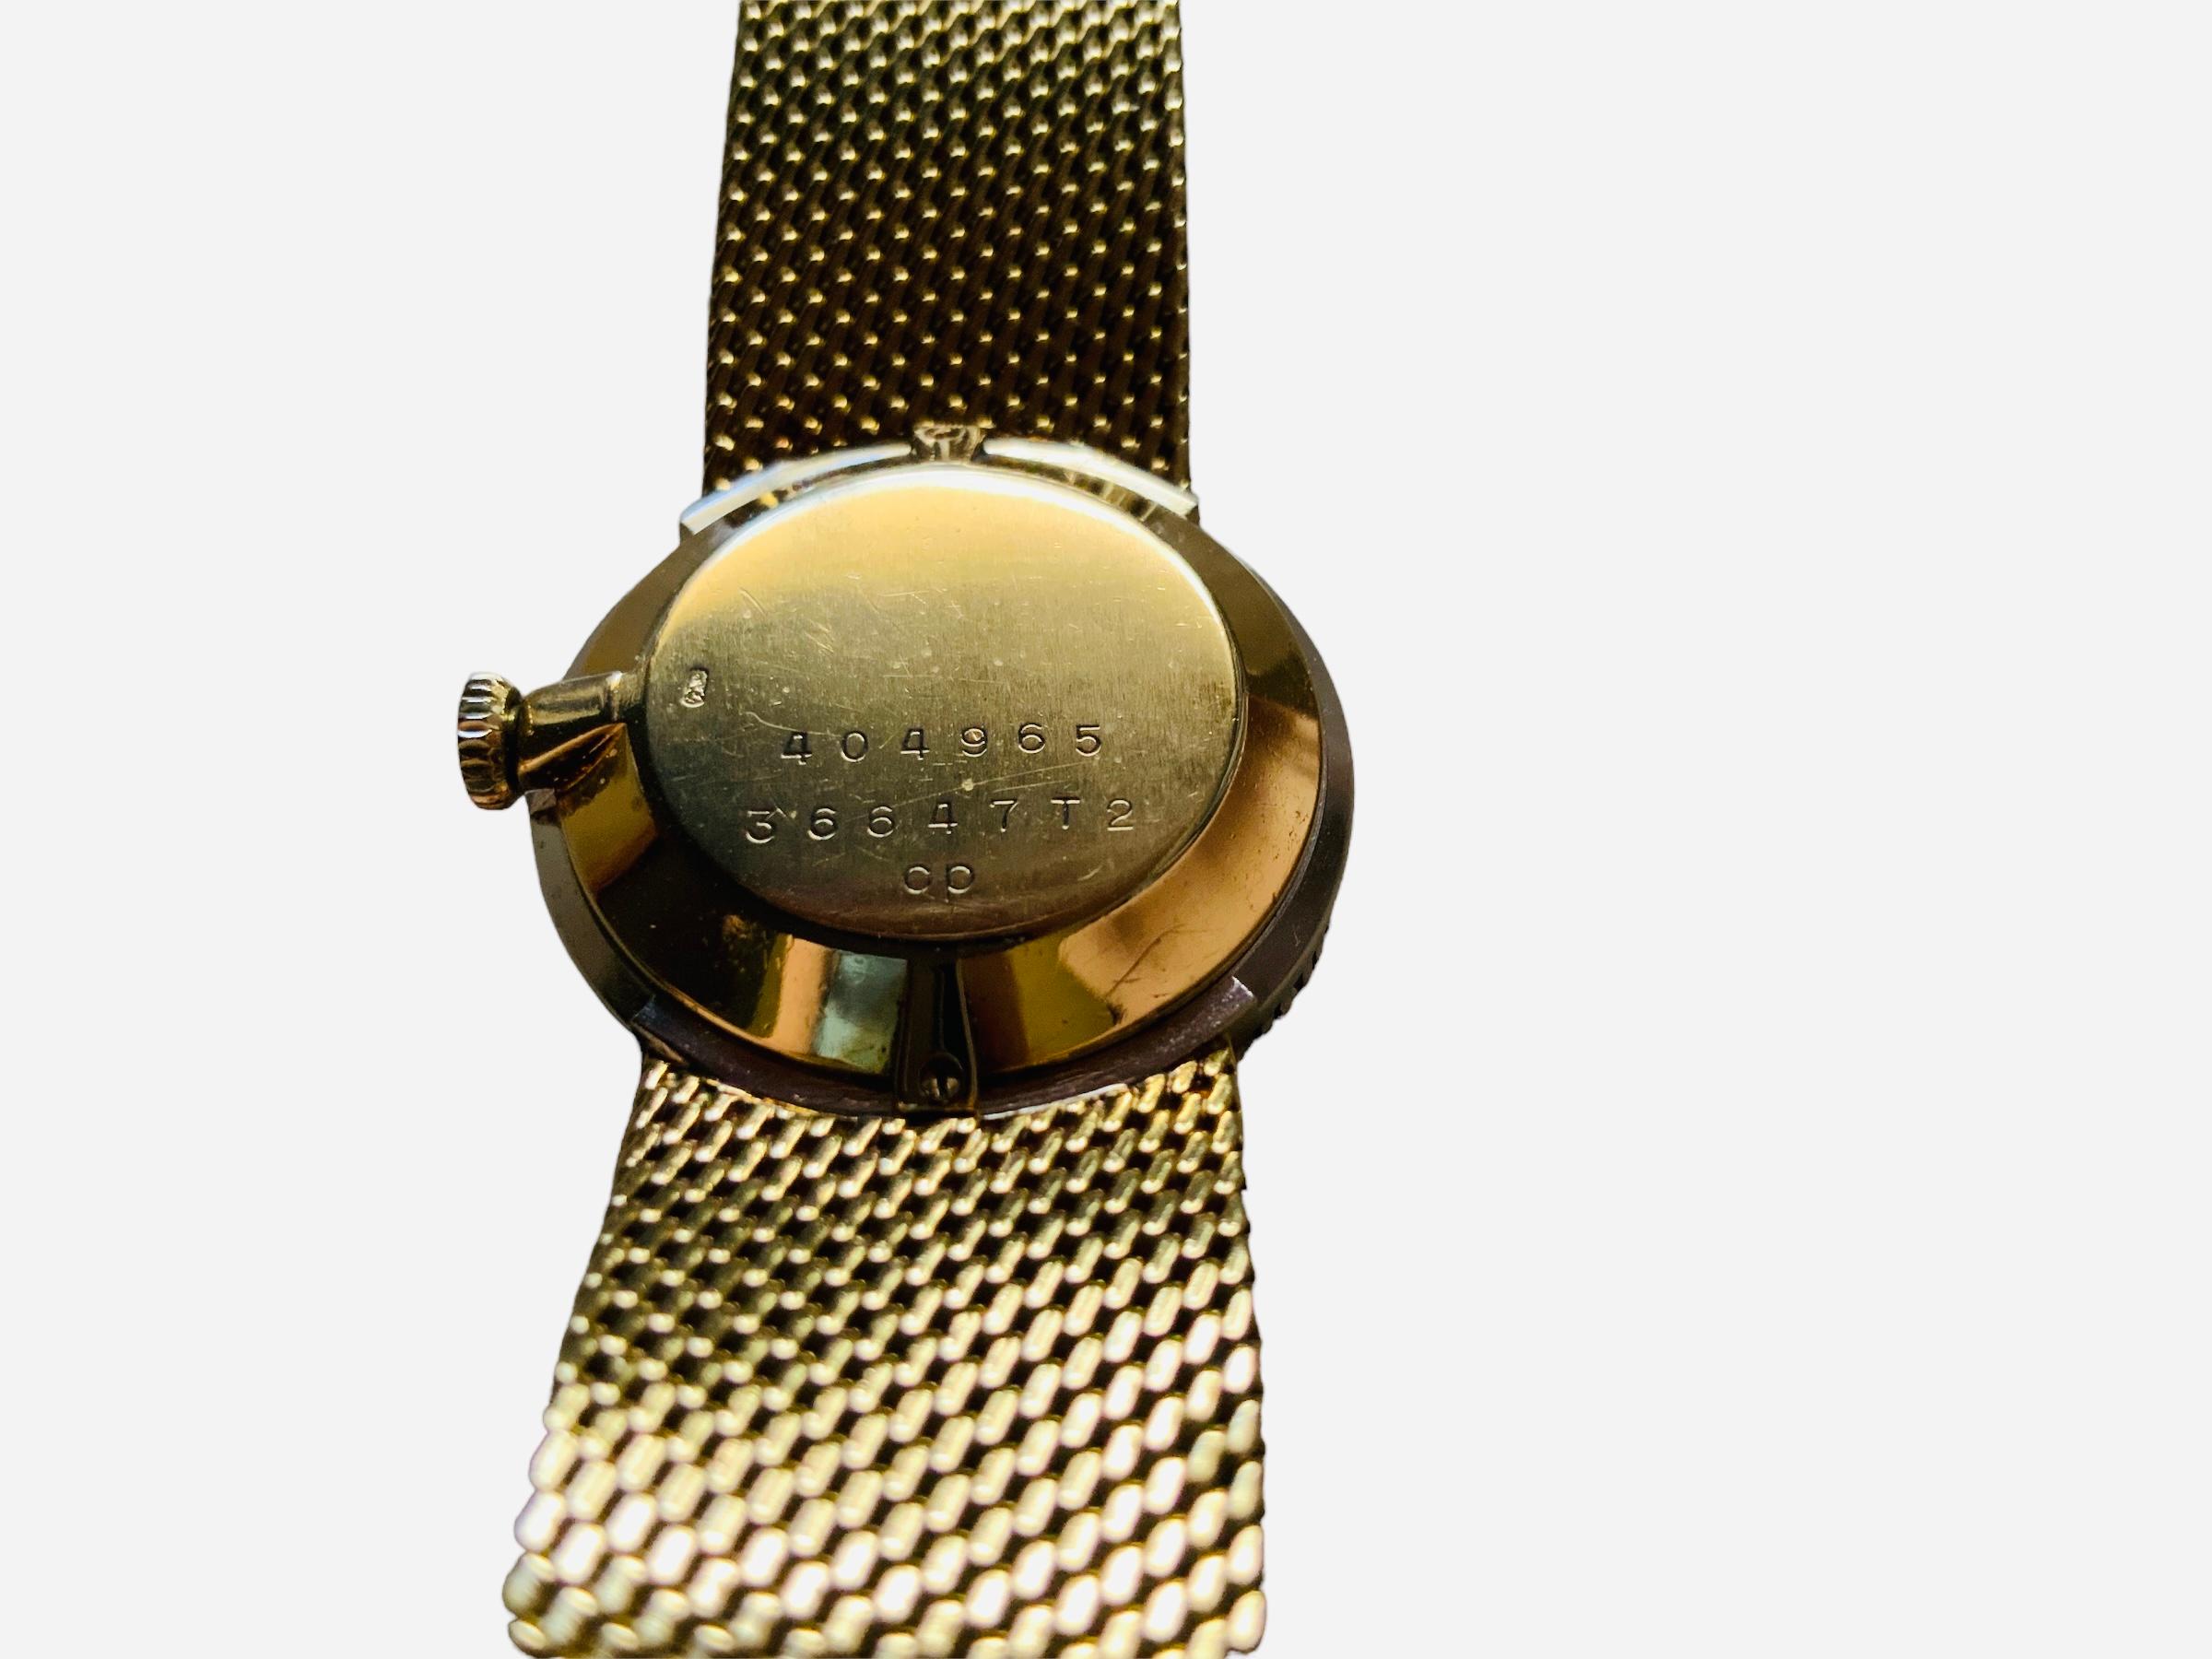 18K Yellow Gold Tiger Eye Baume & Mercier Women Wrist Watch For Sale 3